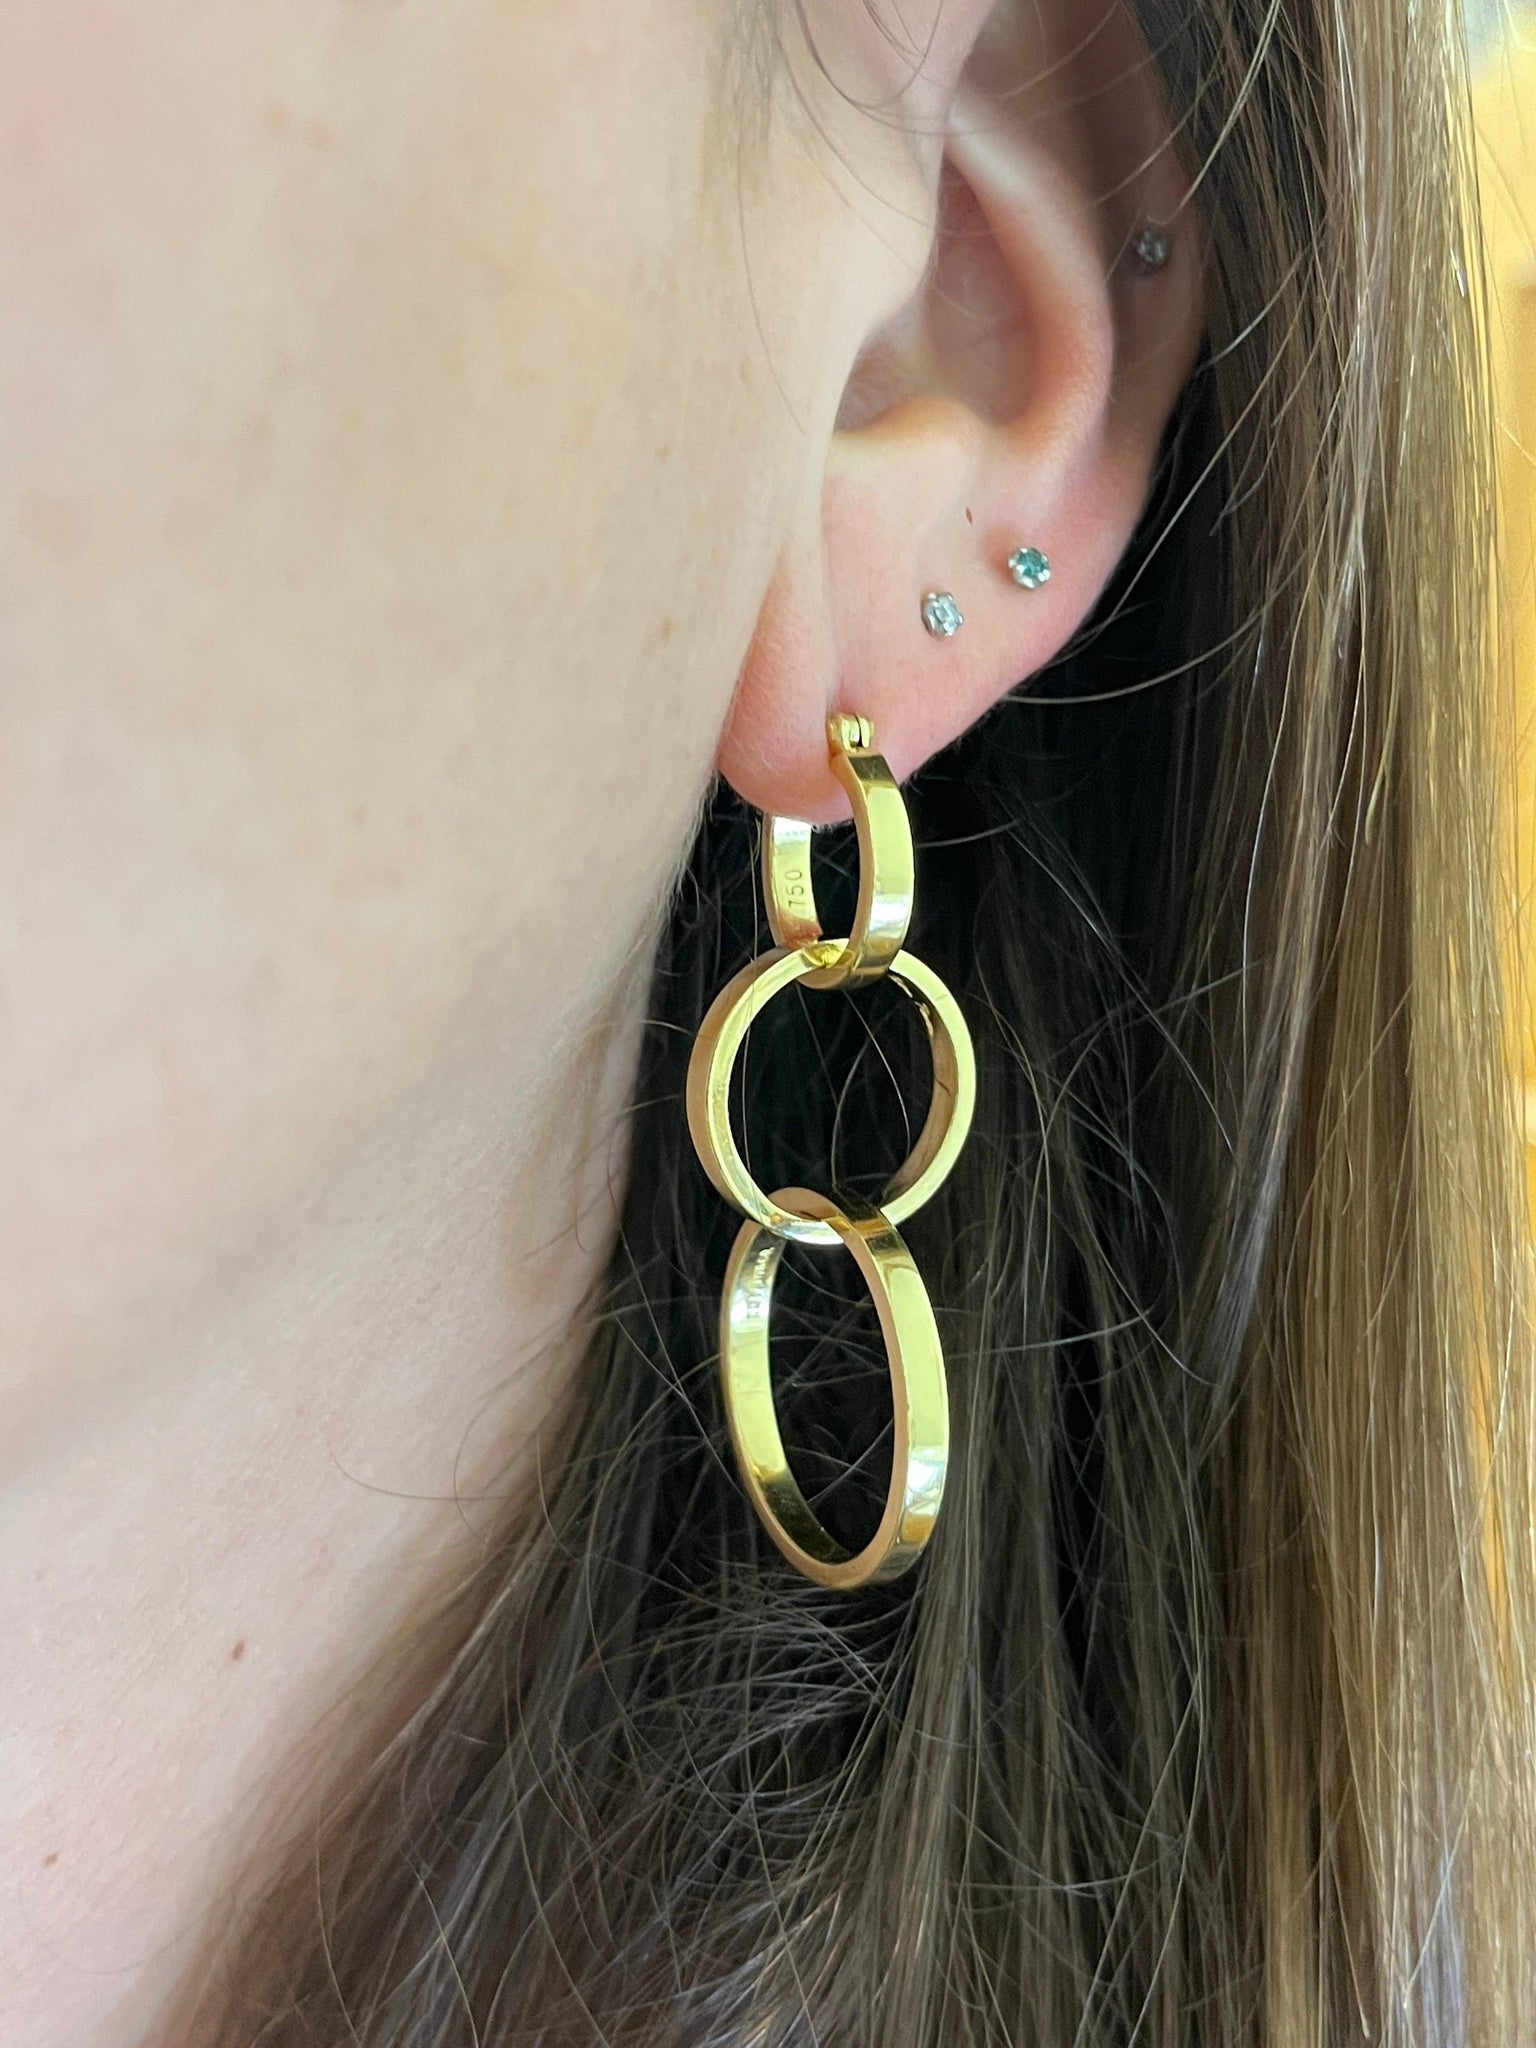 Tiffany & Co. 18K Gold Paloma Picasso 3 Ring Interlocking Hoop Earrings-Earrings-ASSAY